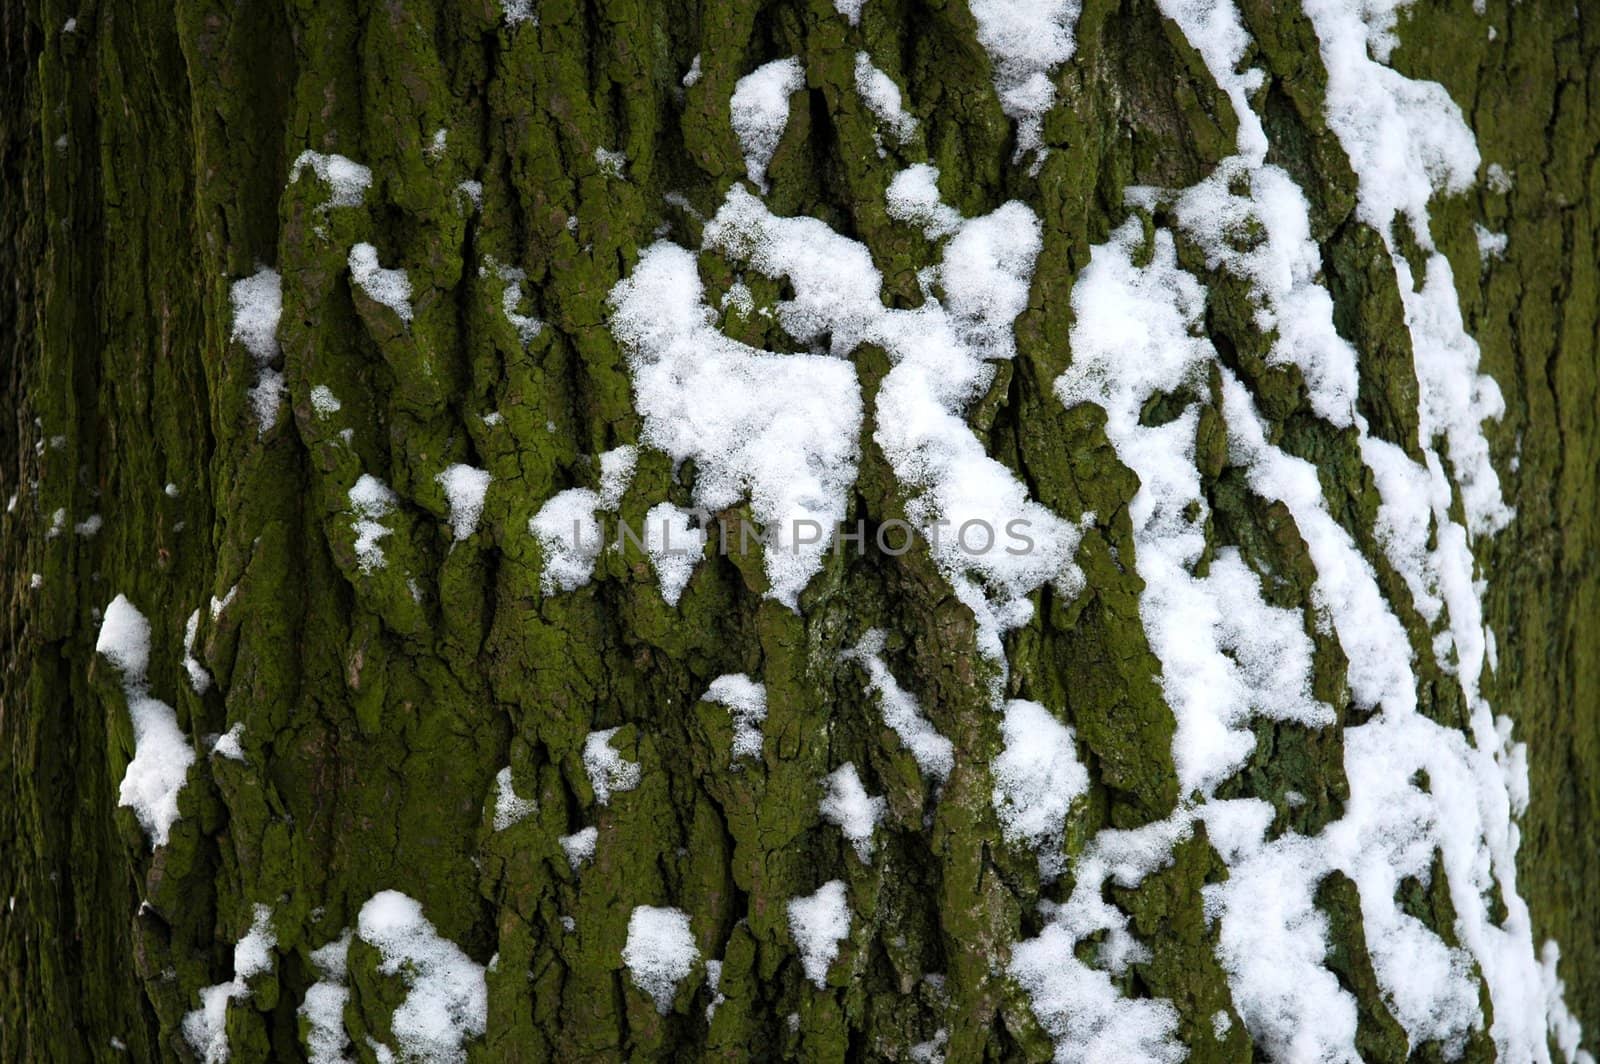 background of snowy tree bark, horizontally framed shot